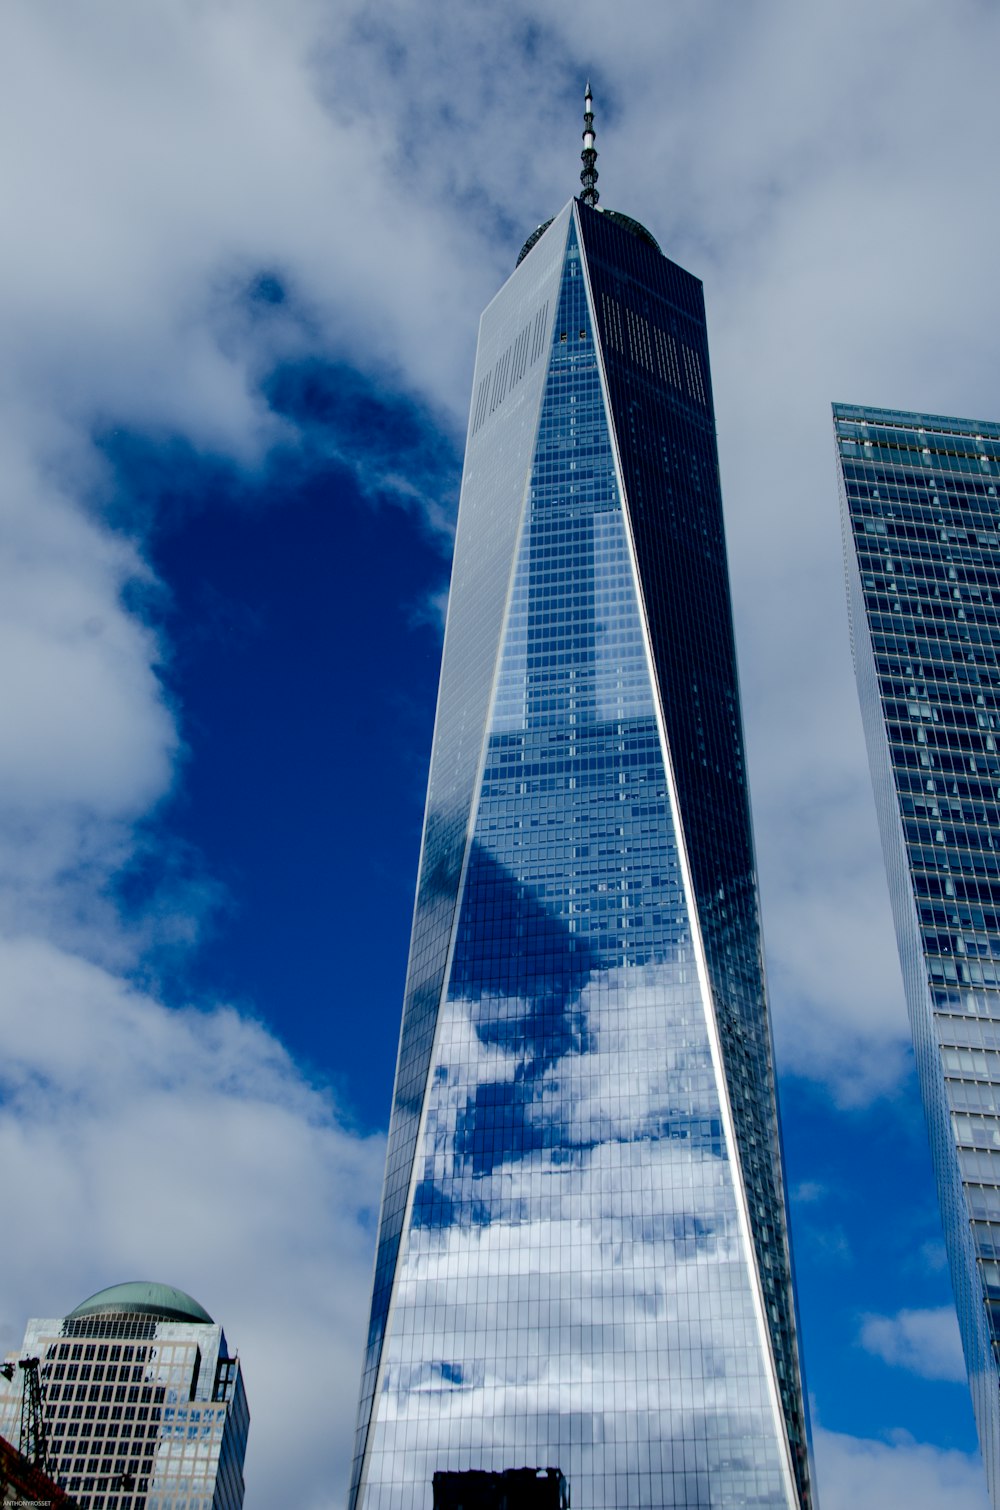 nubes blancas sobre un edificio alto con fachada de vidrio